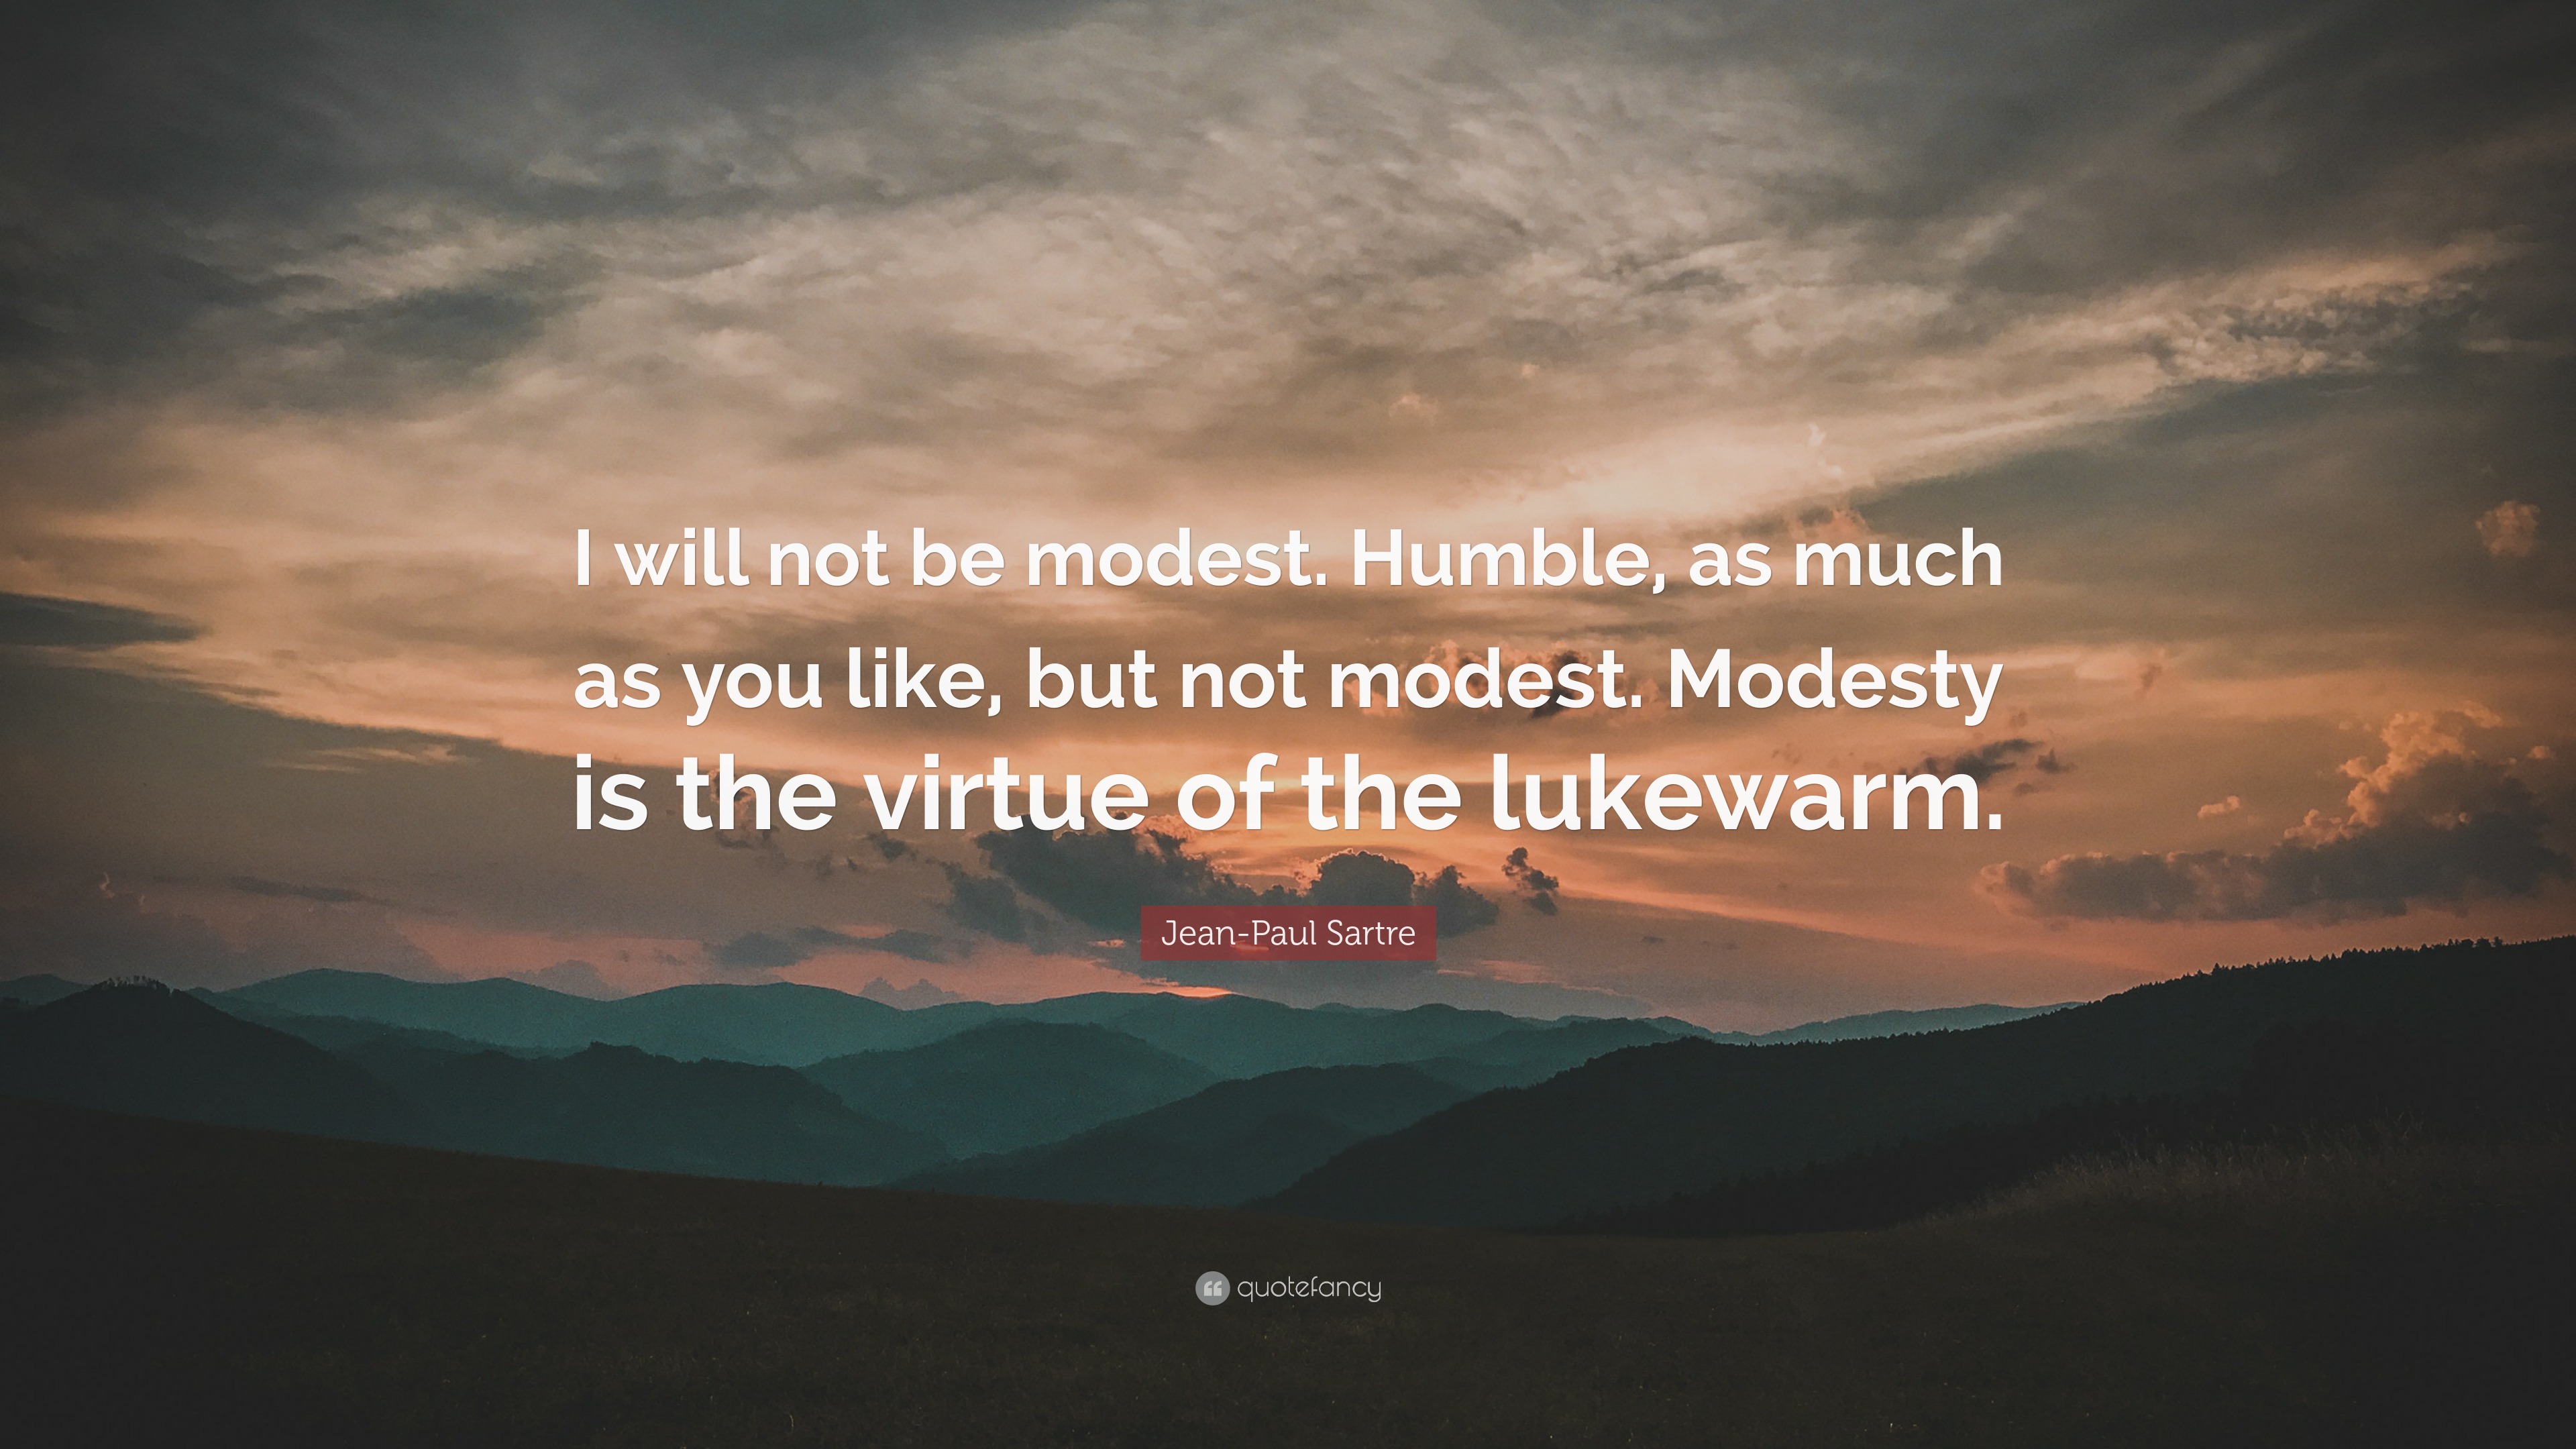 humble as